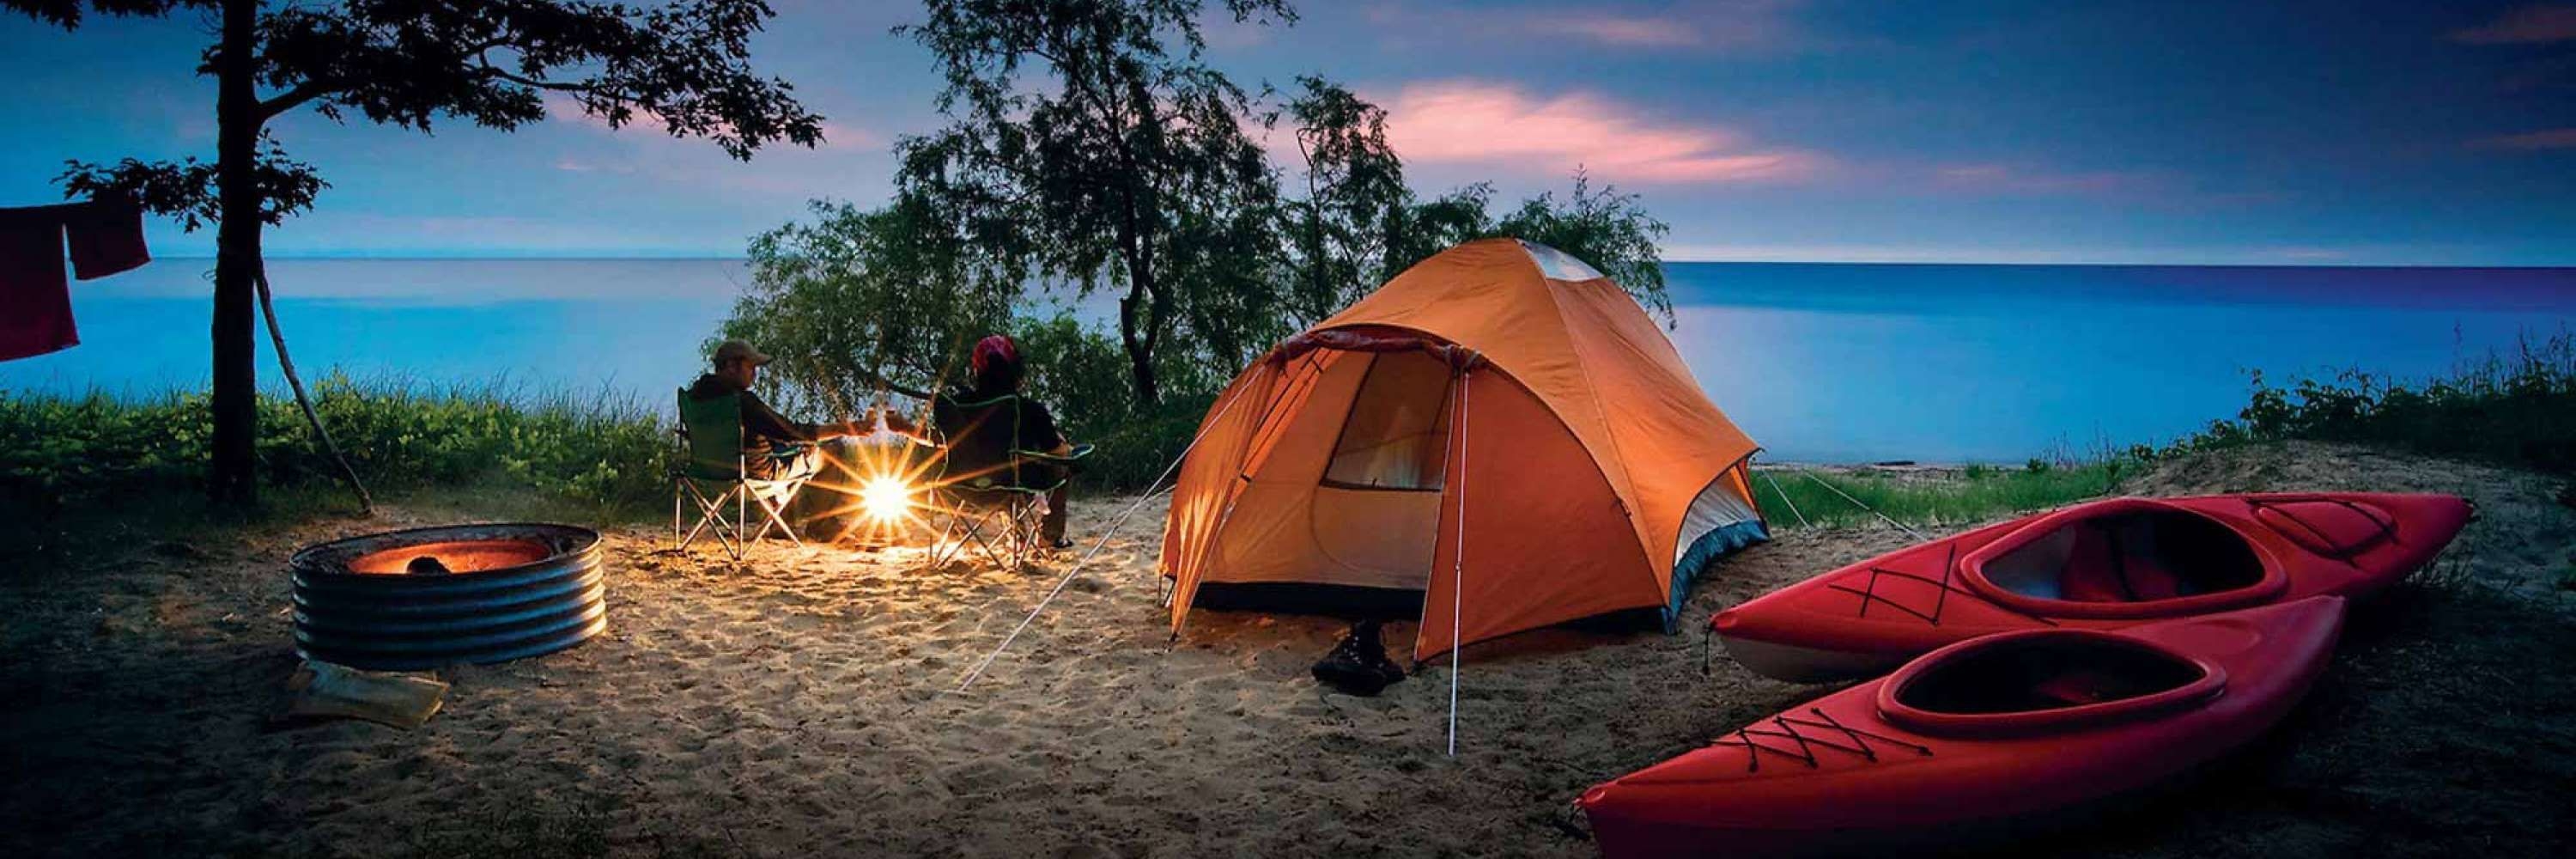 Camping hot. Поляна Увильды кемпинг. Палатка Camping Tent. Увильды кемпинг с палатками. Глэмпинг Увильды.